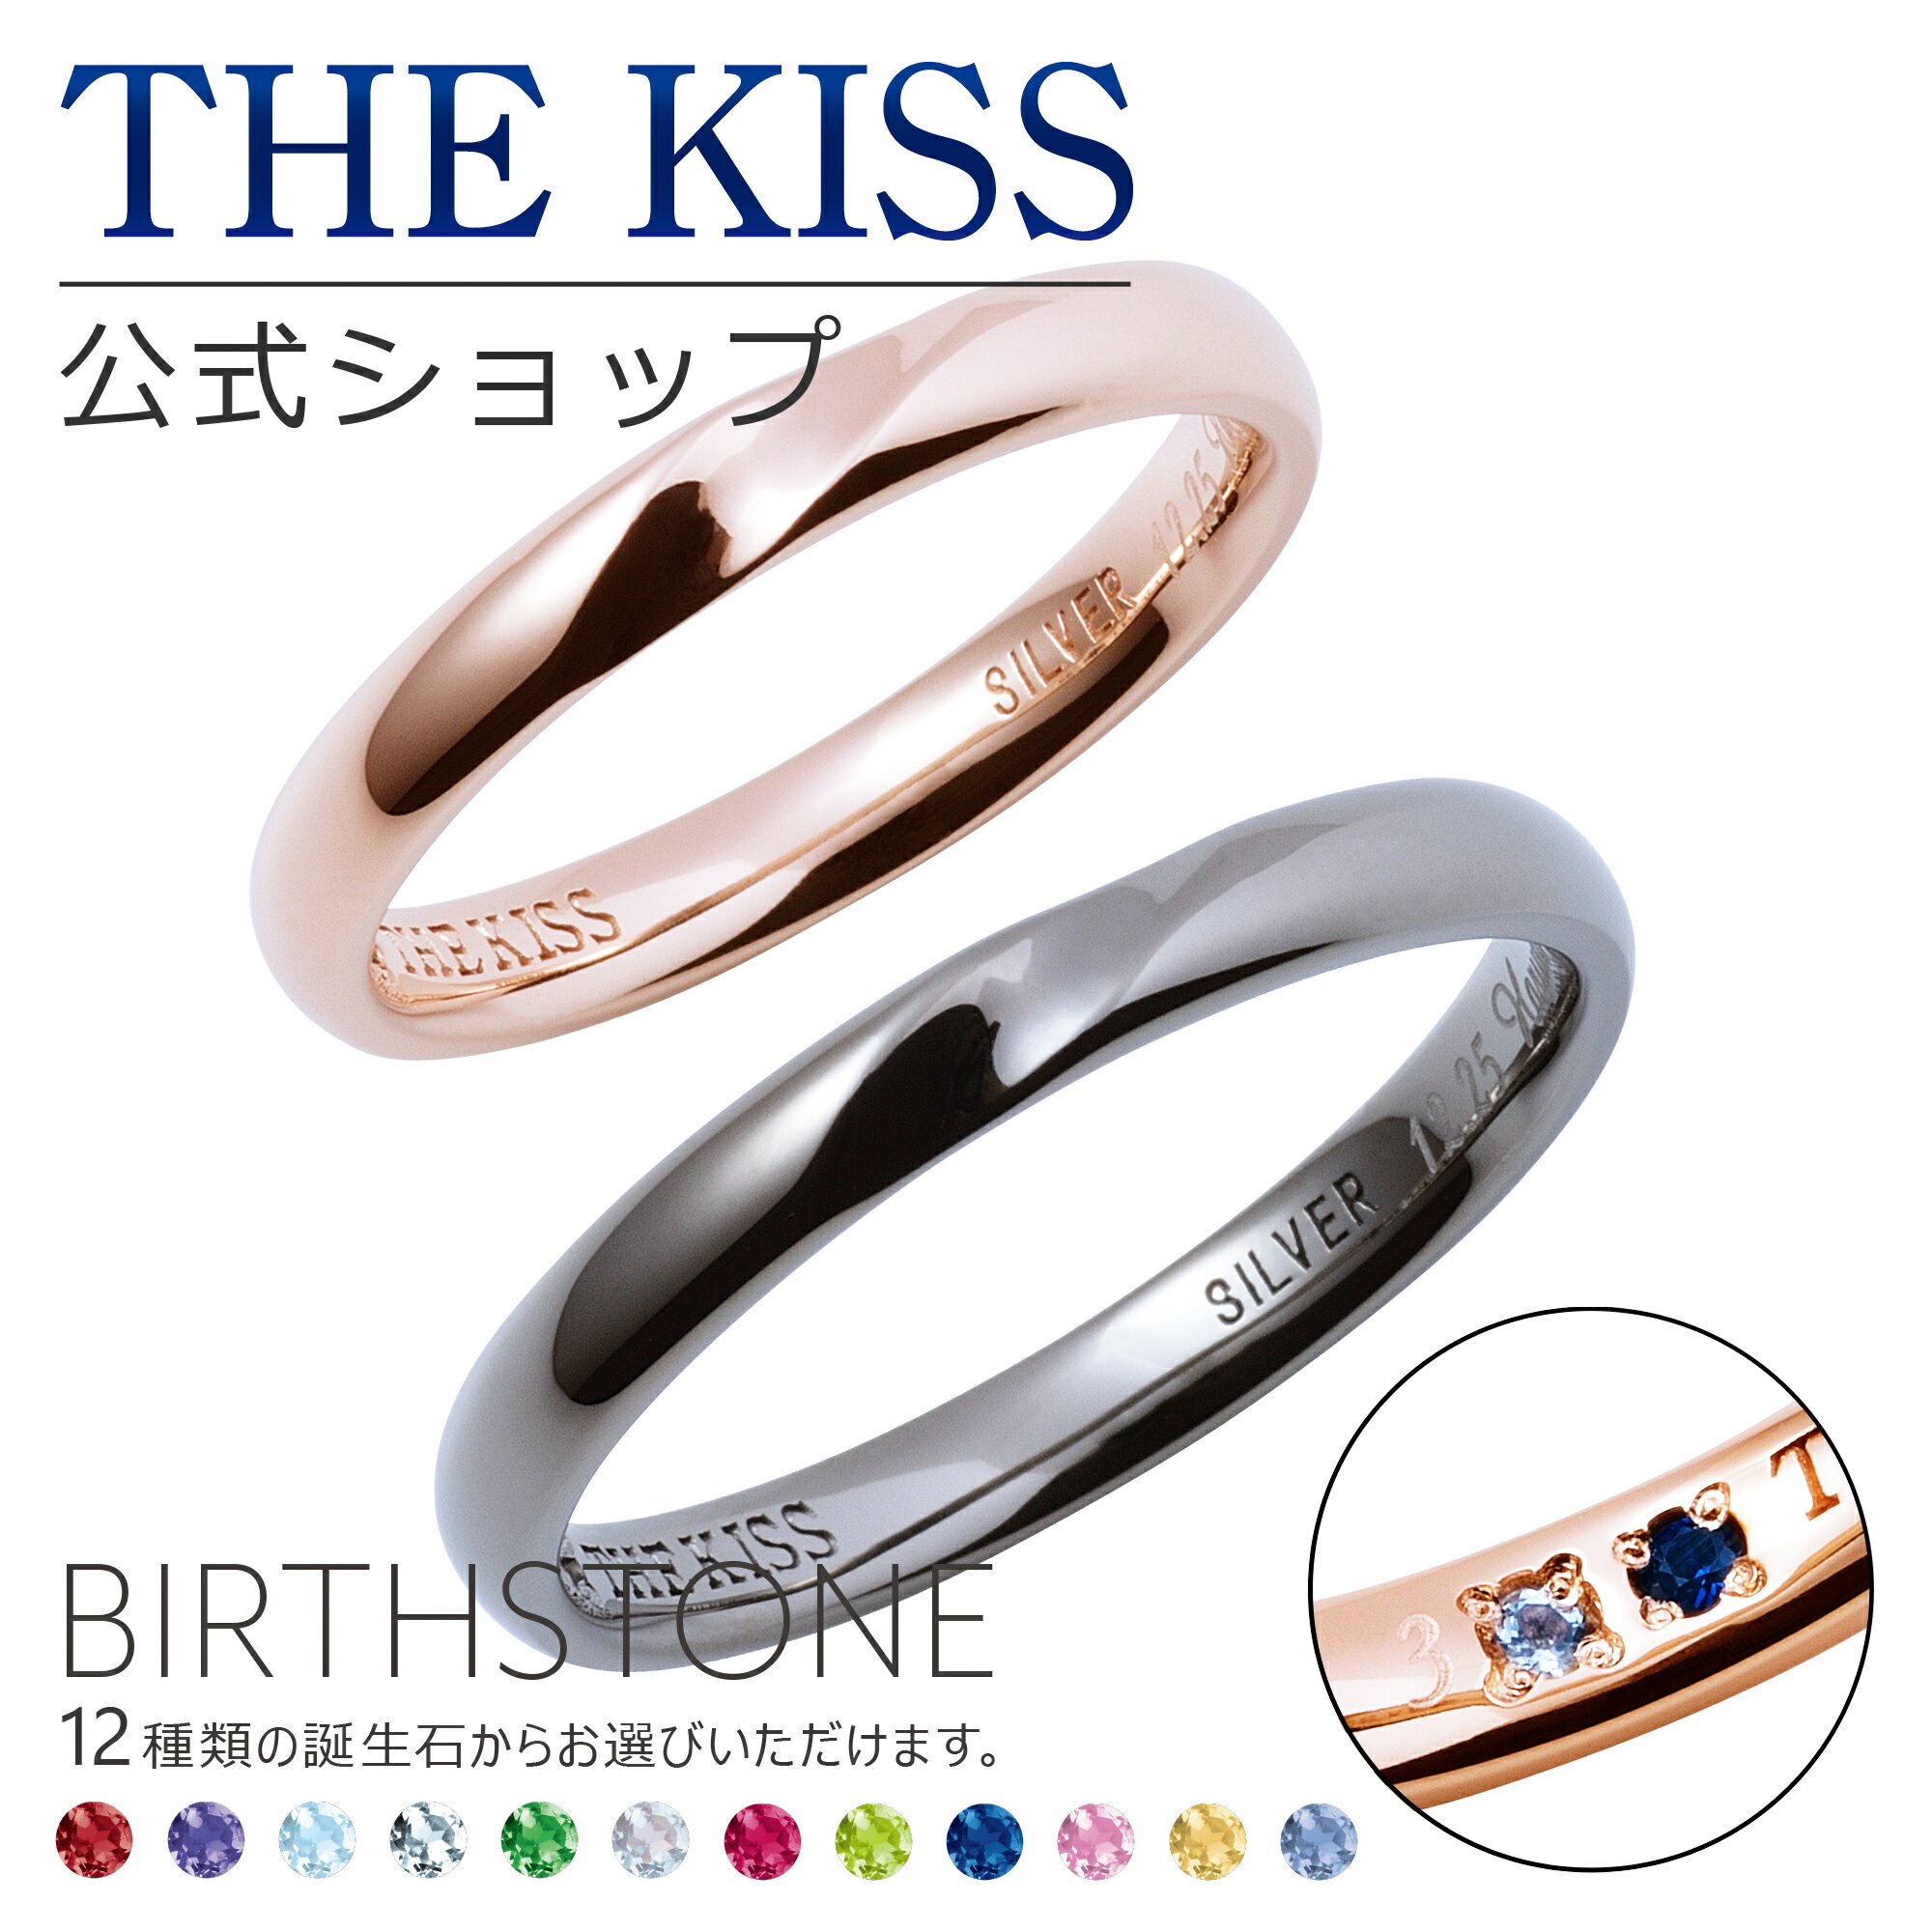 THE KISS 公式ショップ セミオーダー シルバー ペアリング オーダーメイド 偶数 セット ペアアクセサリー カップル 人気 ブランド THEKISS 指輪 誕生石 バースデーストーン 男性 女性 2個セット 母の日